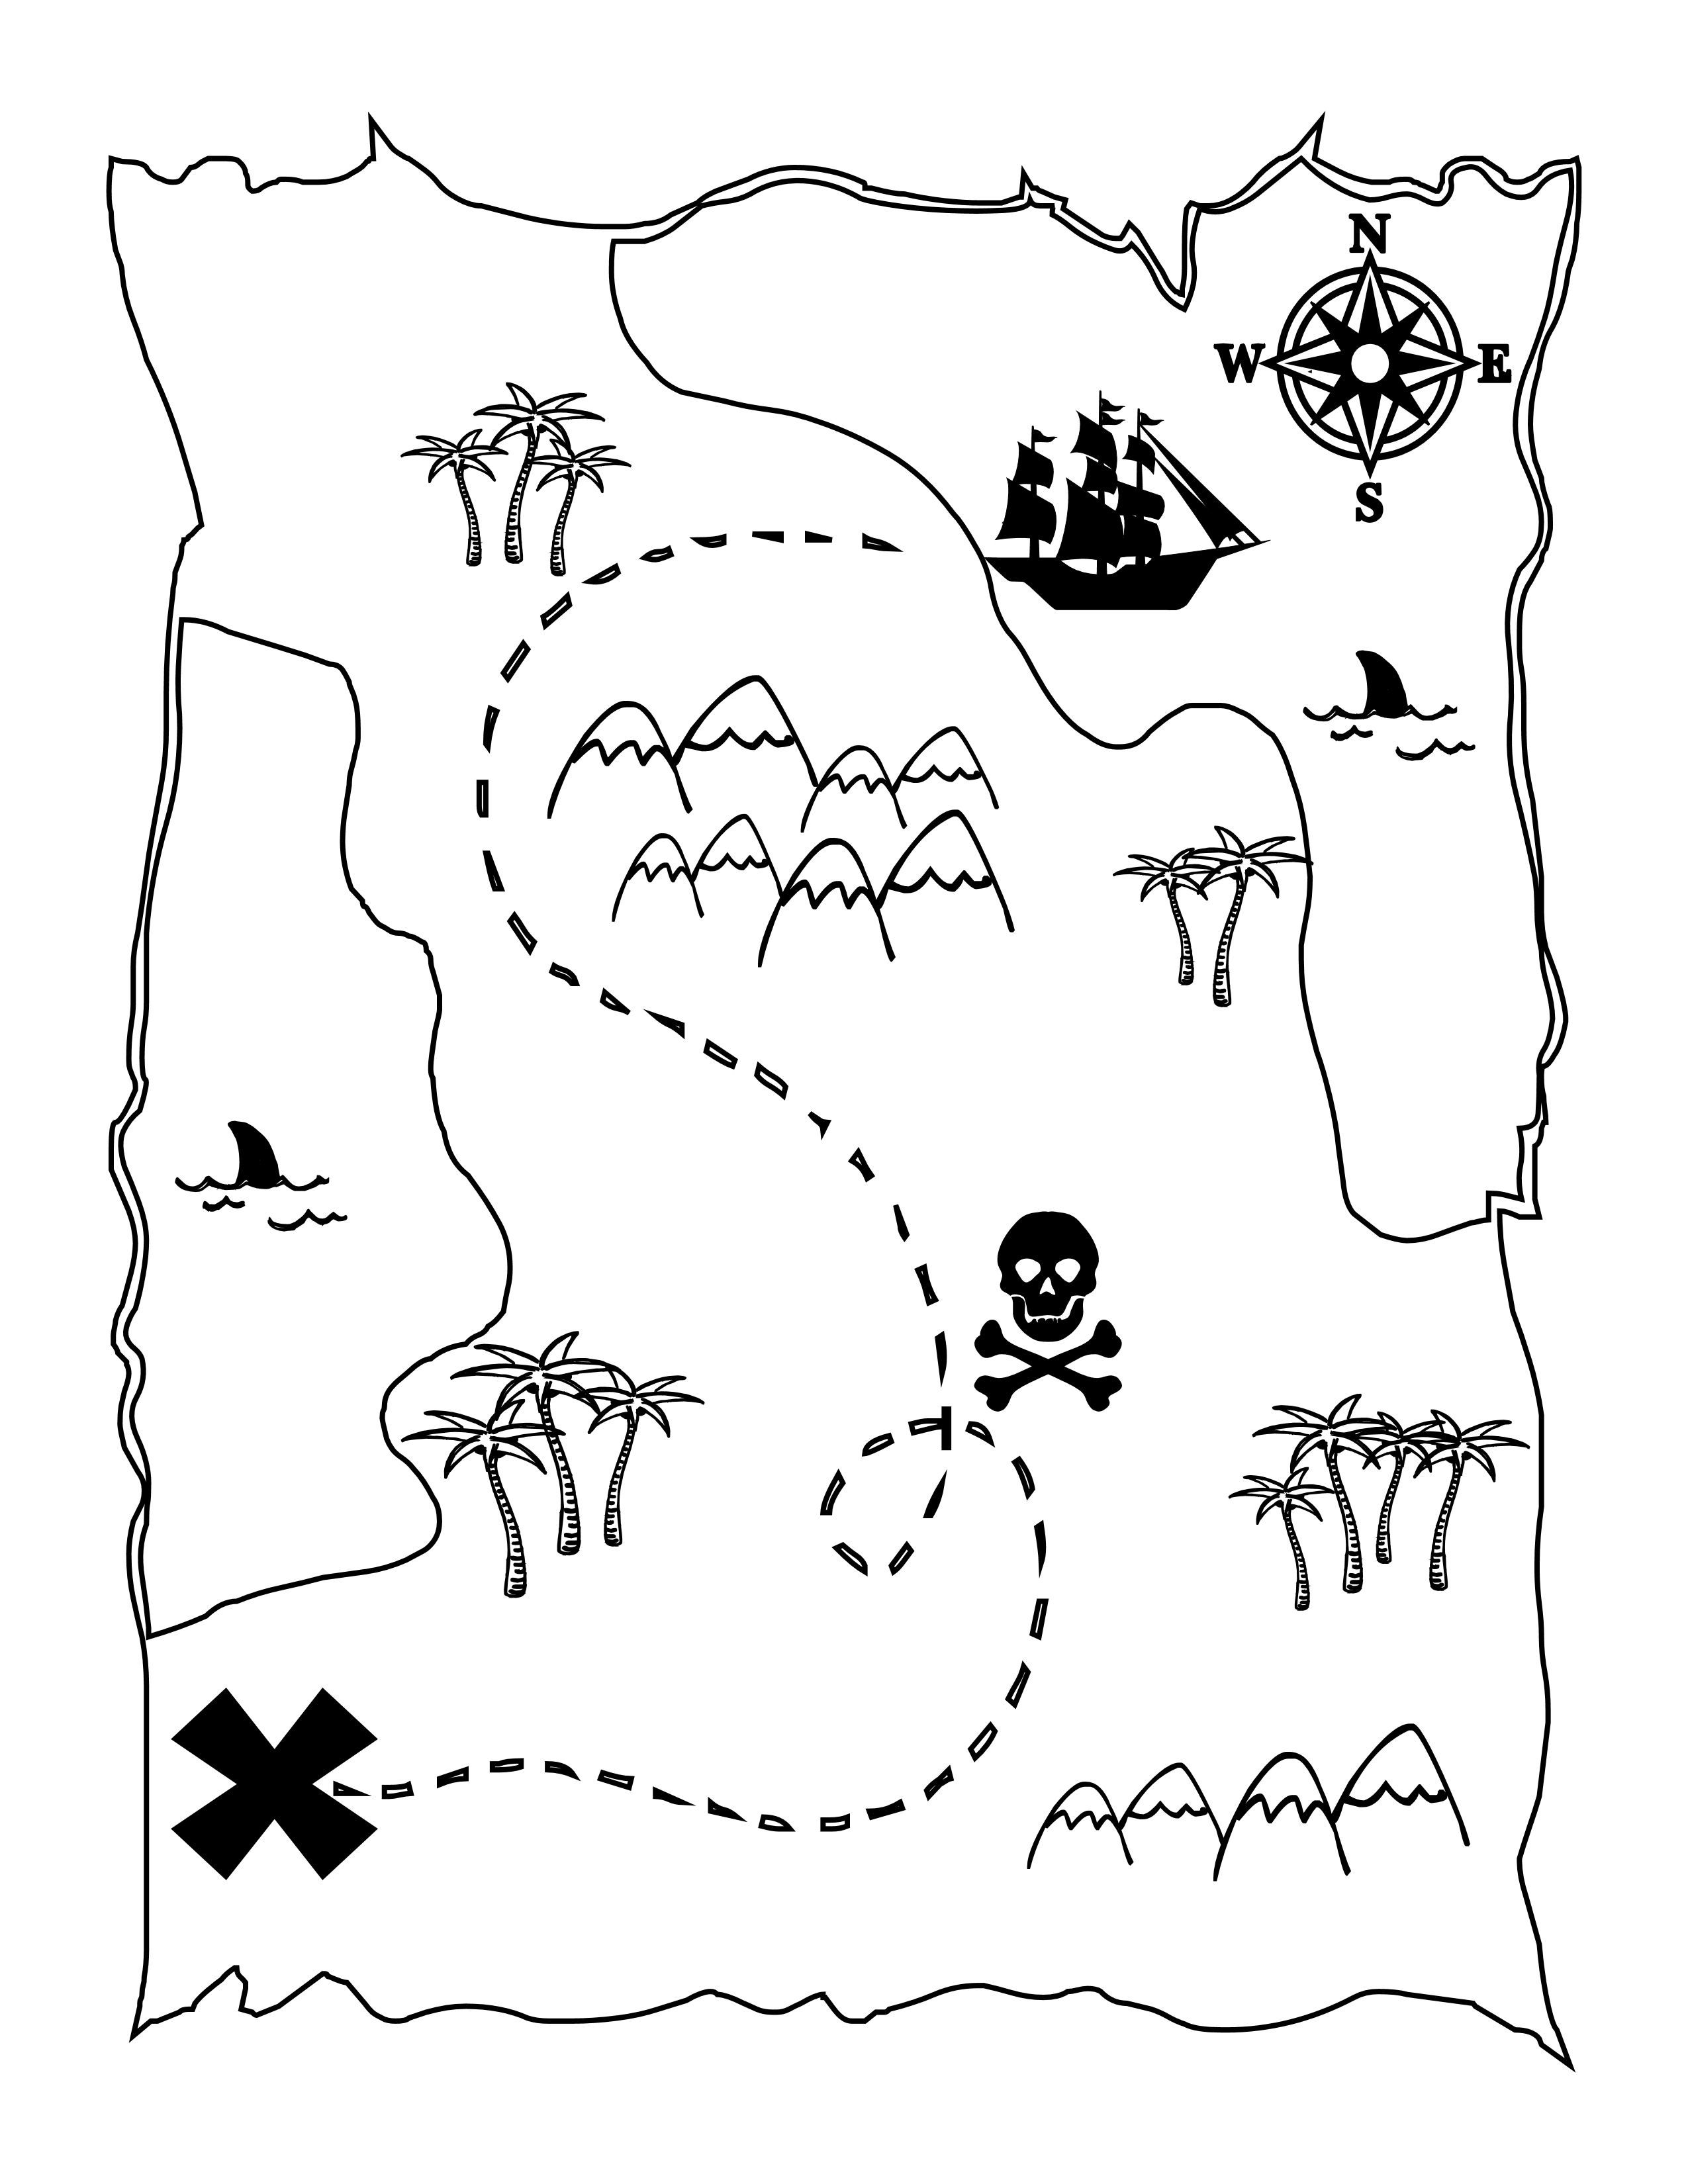 Printable Treasure Map Kids Activity | Printables | Pinterest - Free Printable Maps For Kids